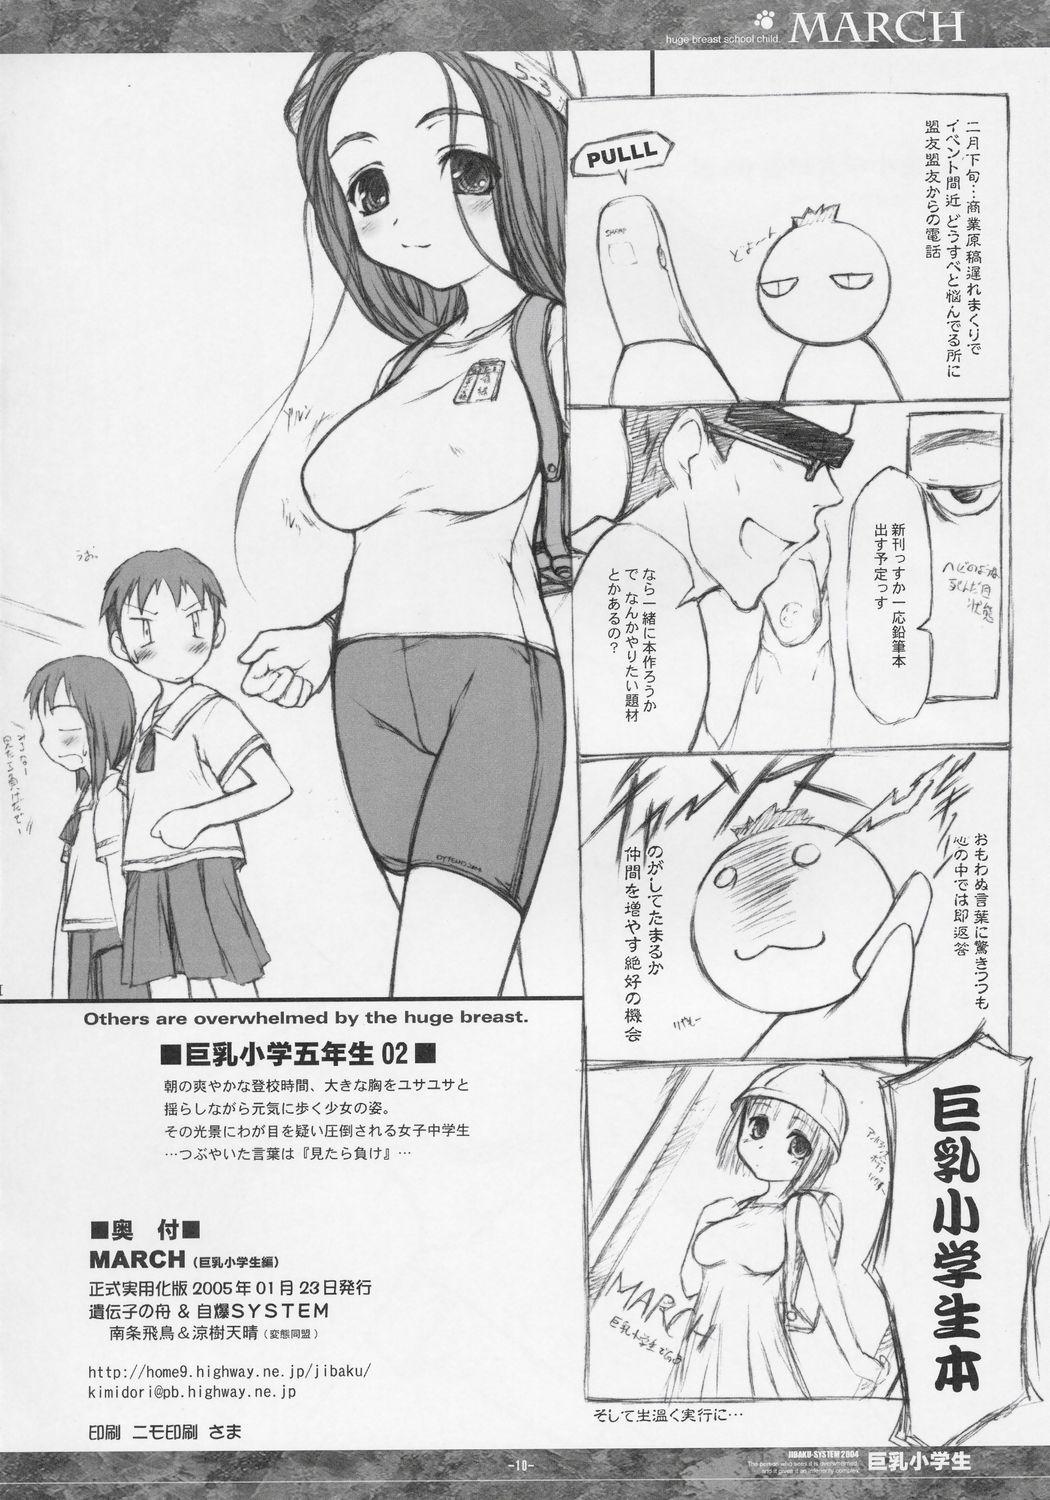 MARCH Kyonyuu Shougakusei Hon - Huge Breast School Child 9